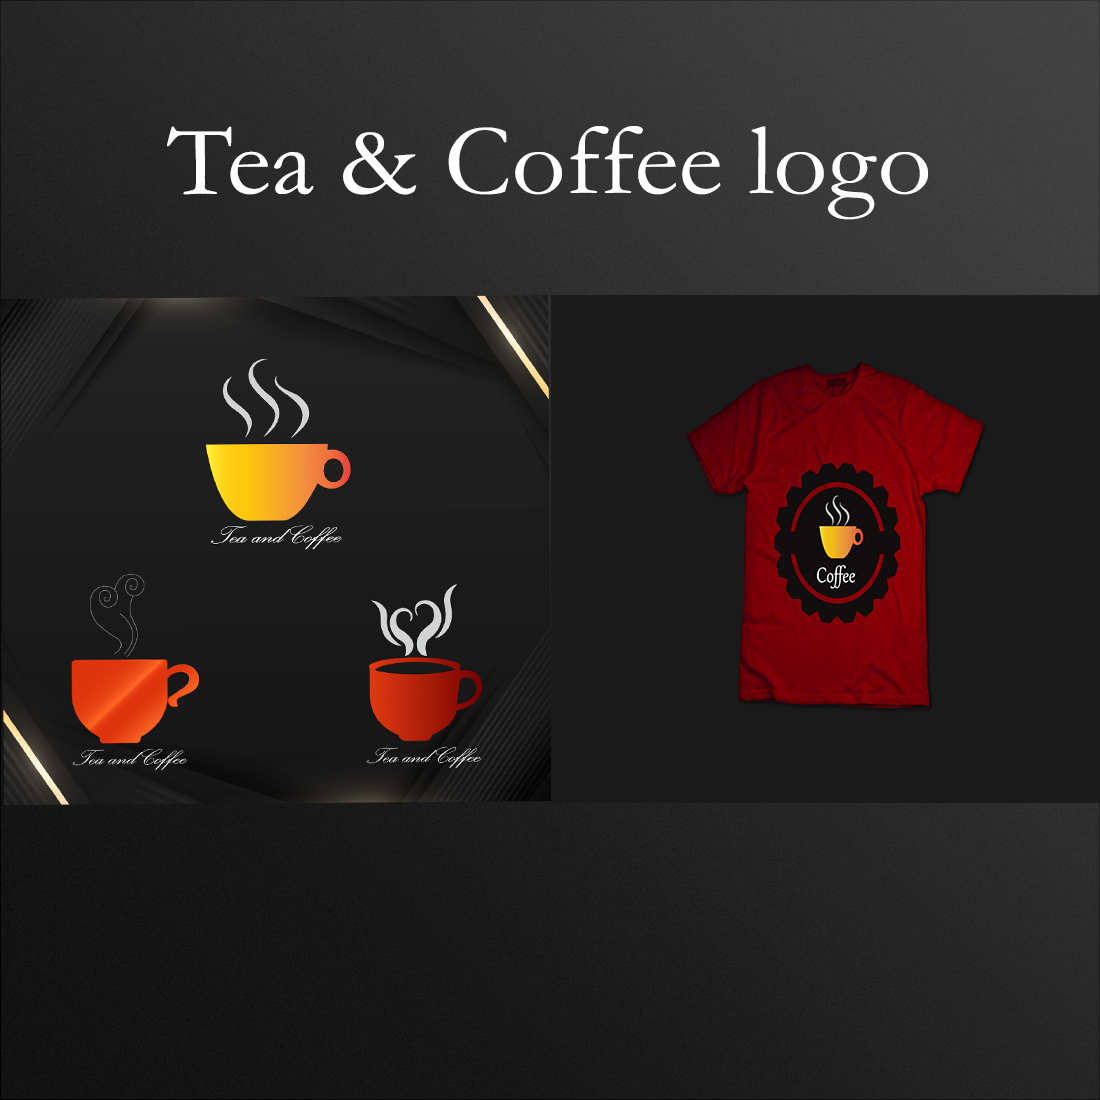 Tea and Coffee Logo presentation.